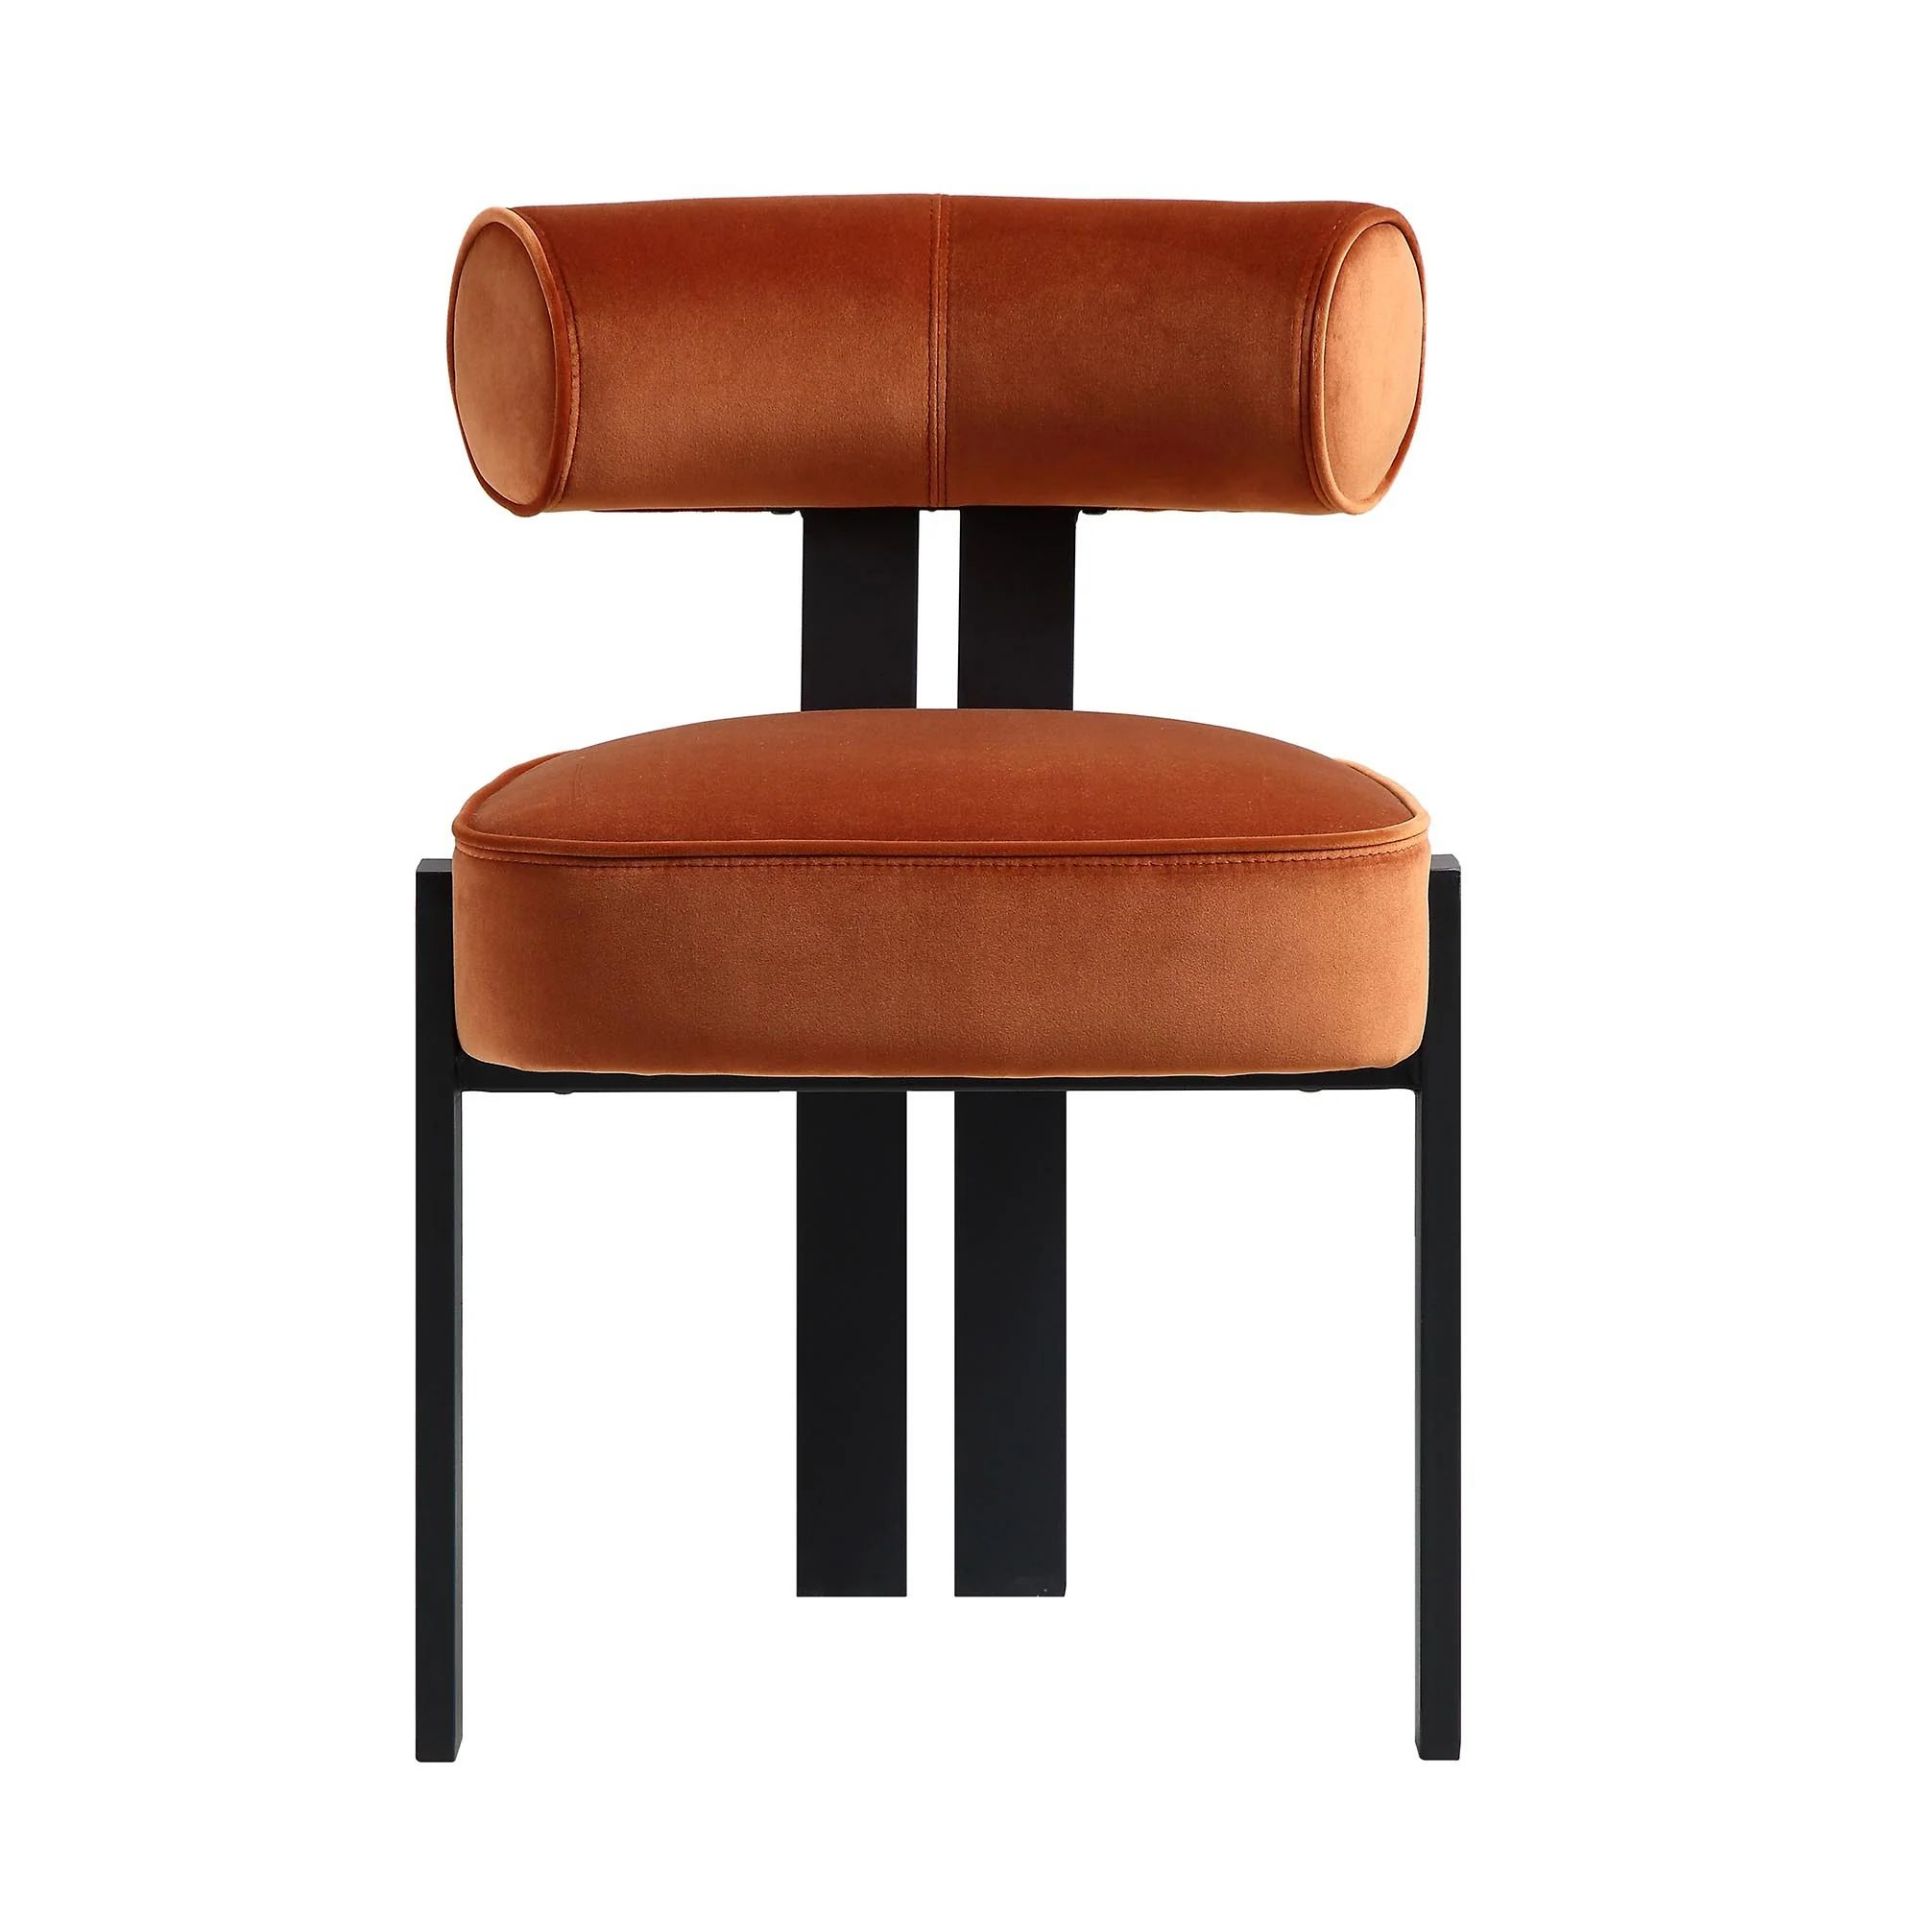 Ophelia Rust Velvet Dining Chair. - R19.1. RRP £229.99. Combining sumptuous rust velvet touch